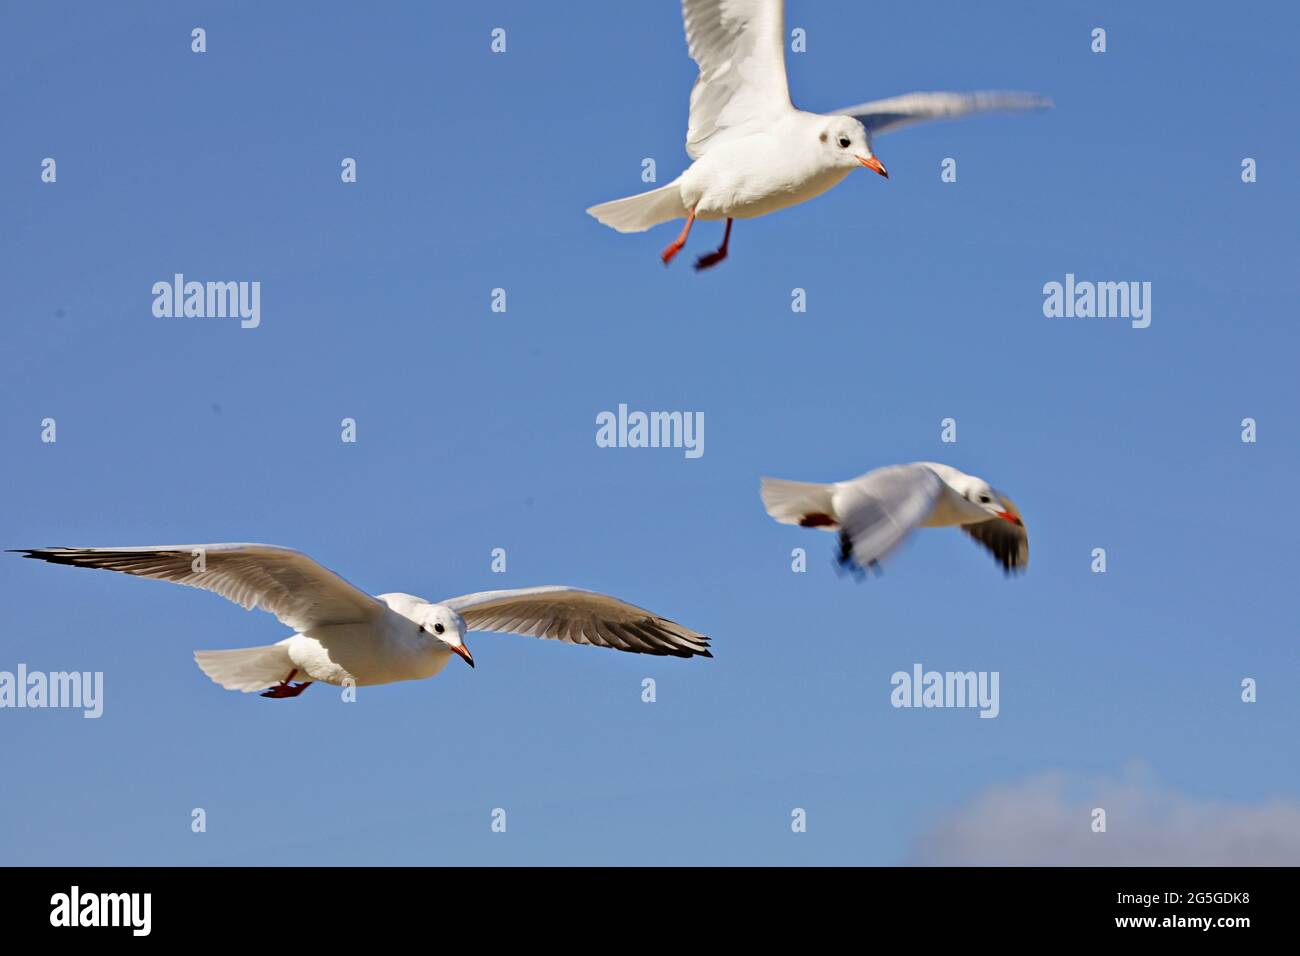 Seagulls soaring over the sea Stock Photo